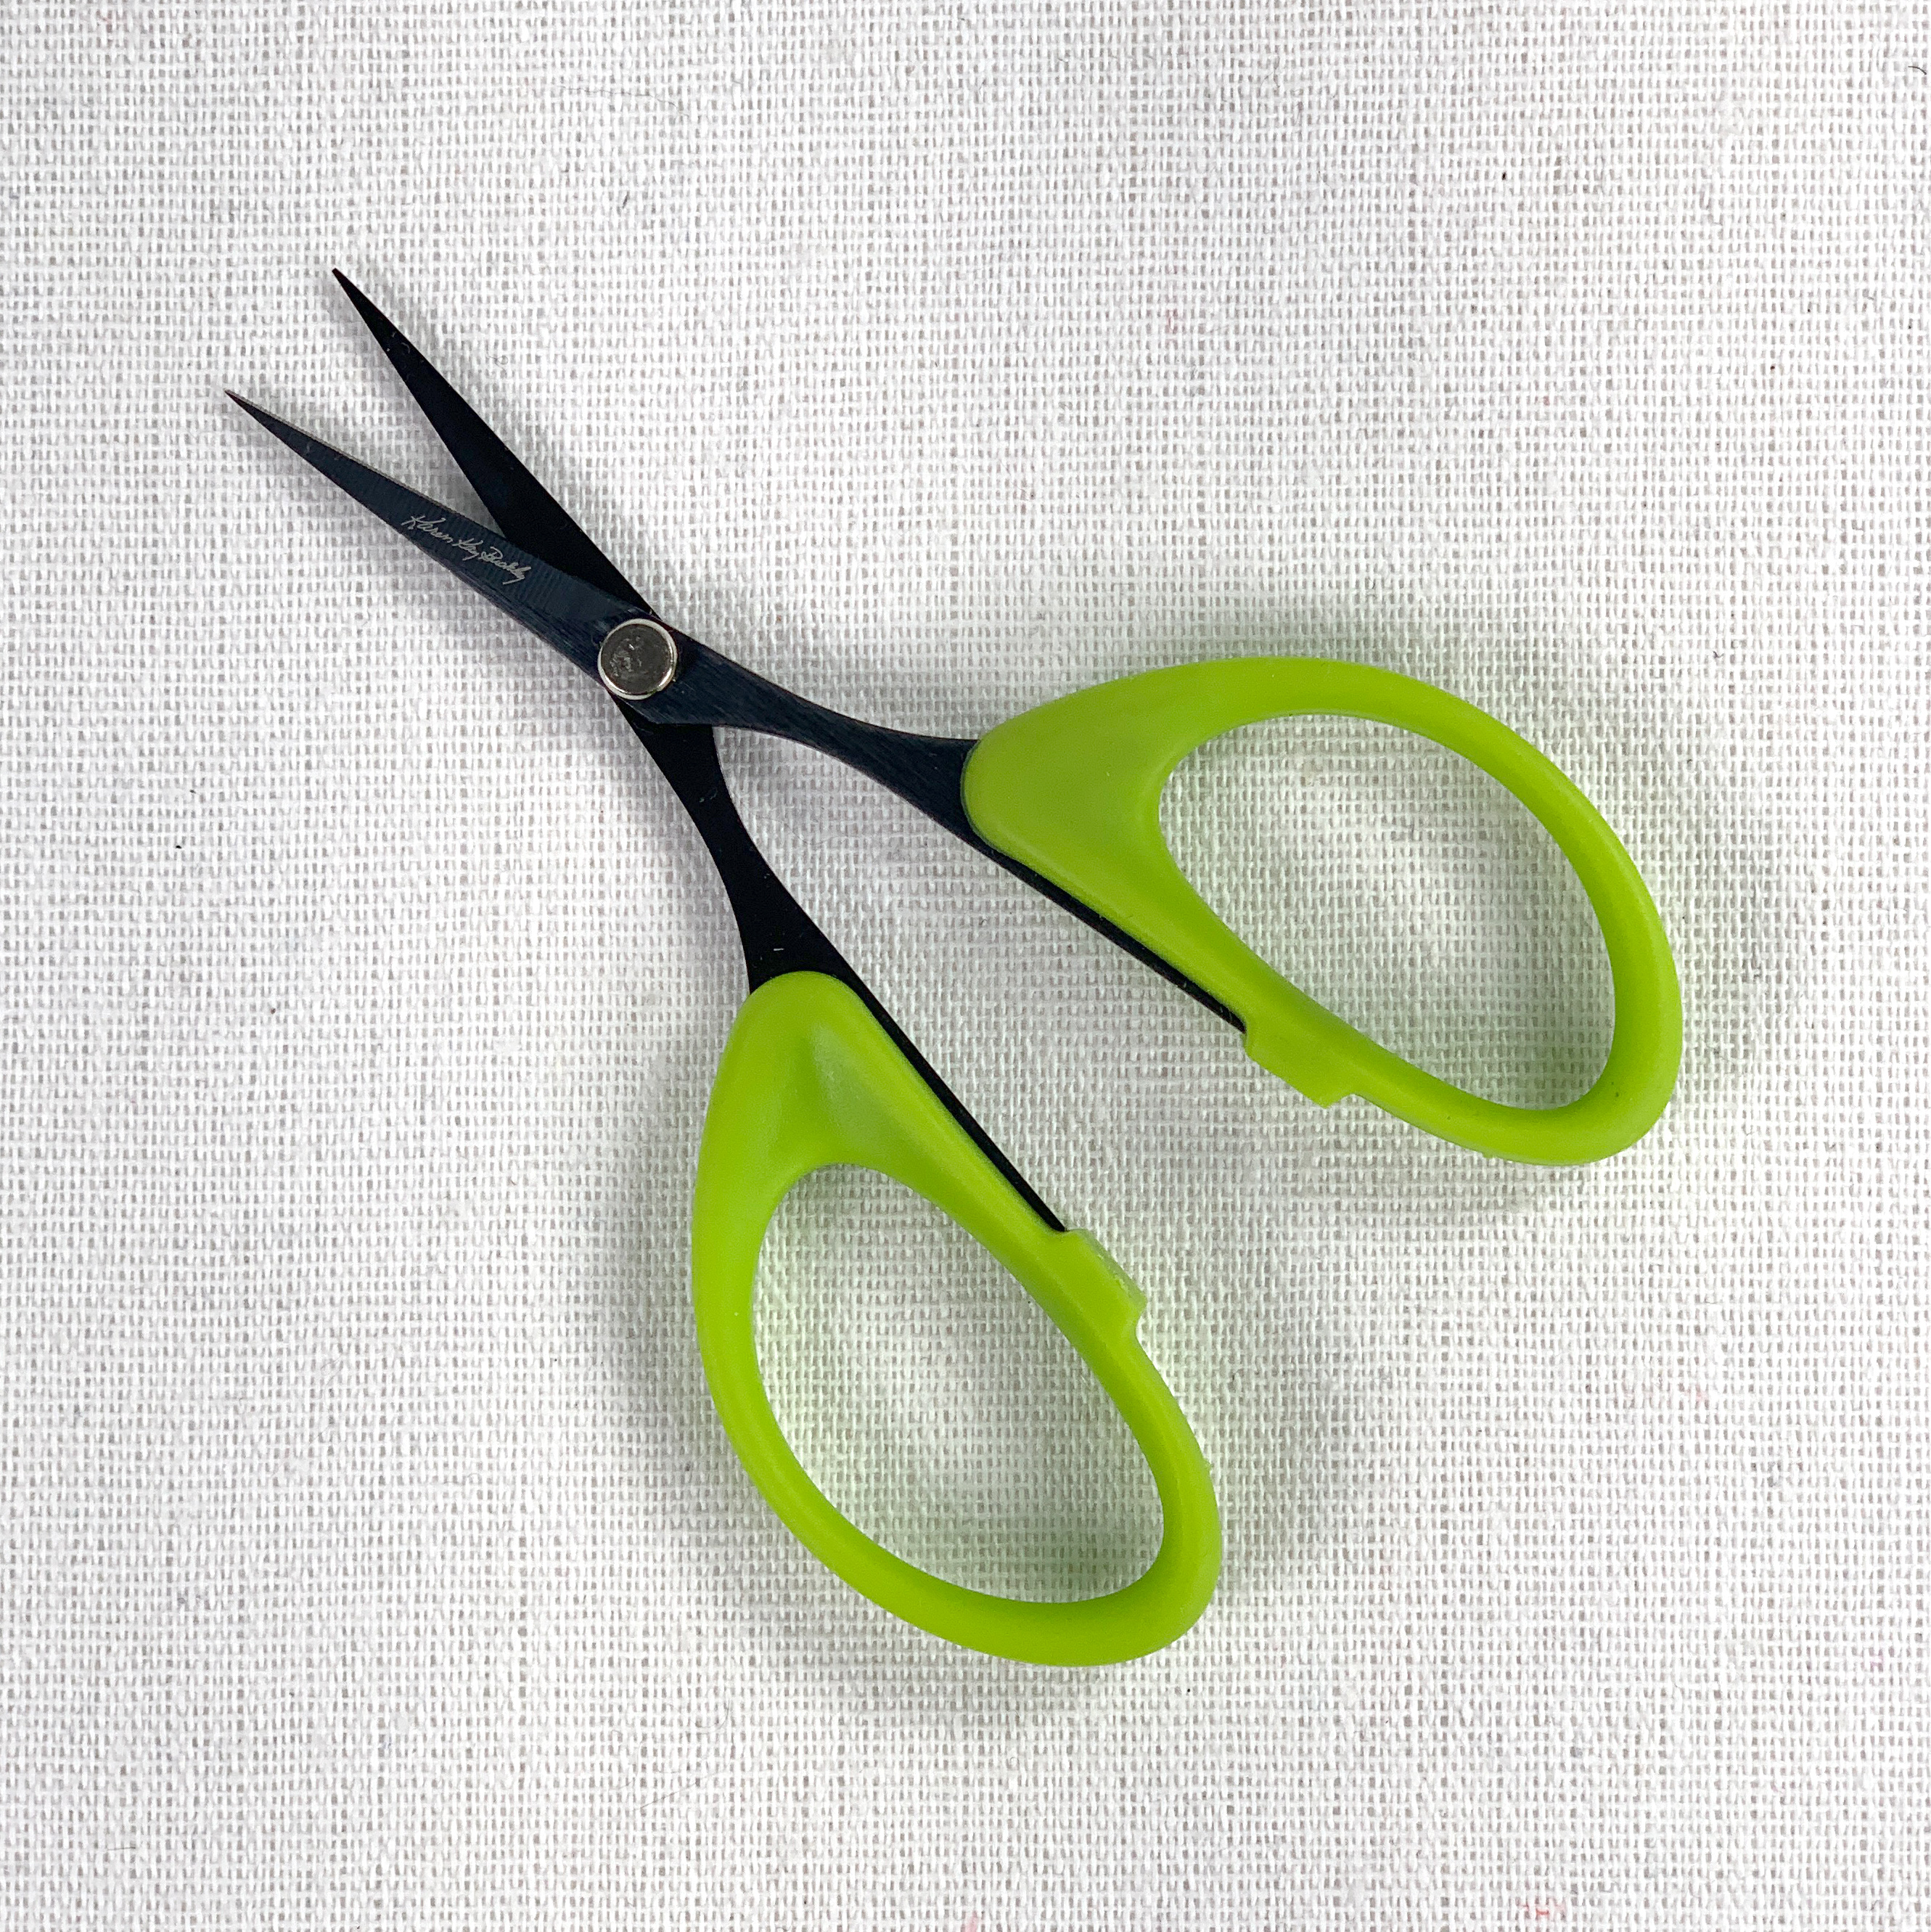 Karen Kay Buckley Small Green 4 Perfect Scissors Serrated Blade Quilting